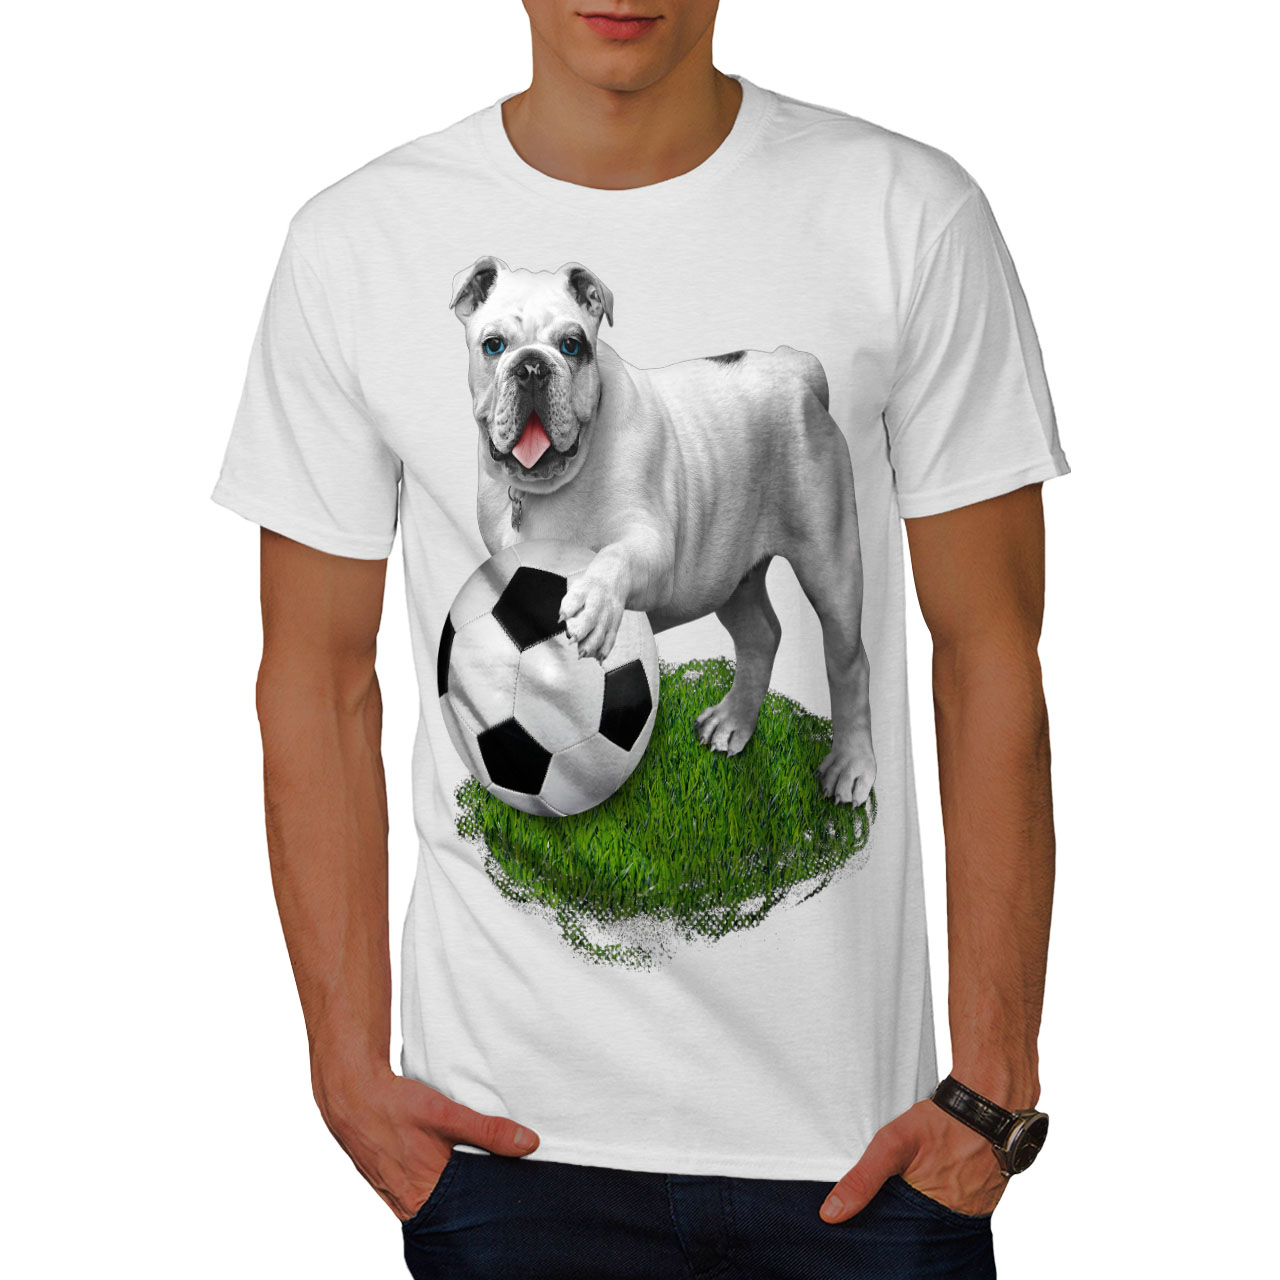 Wellcoda Juego De Fútbol Deporte Hombre Bola Camiseta Diseño gráfico impreso camiseta